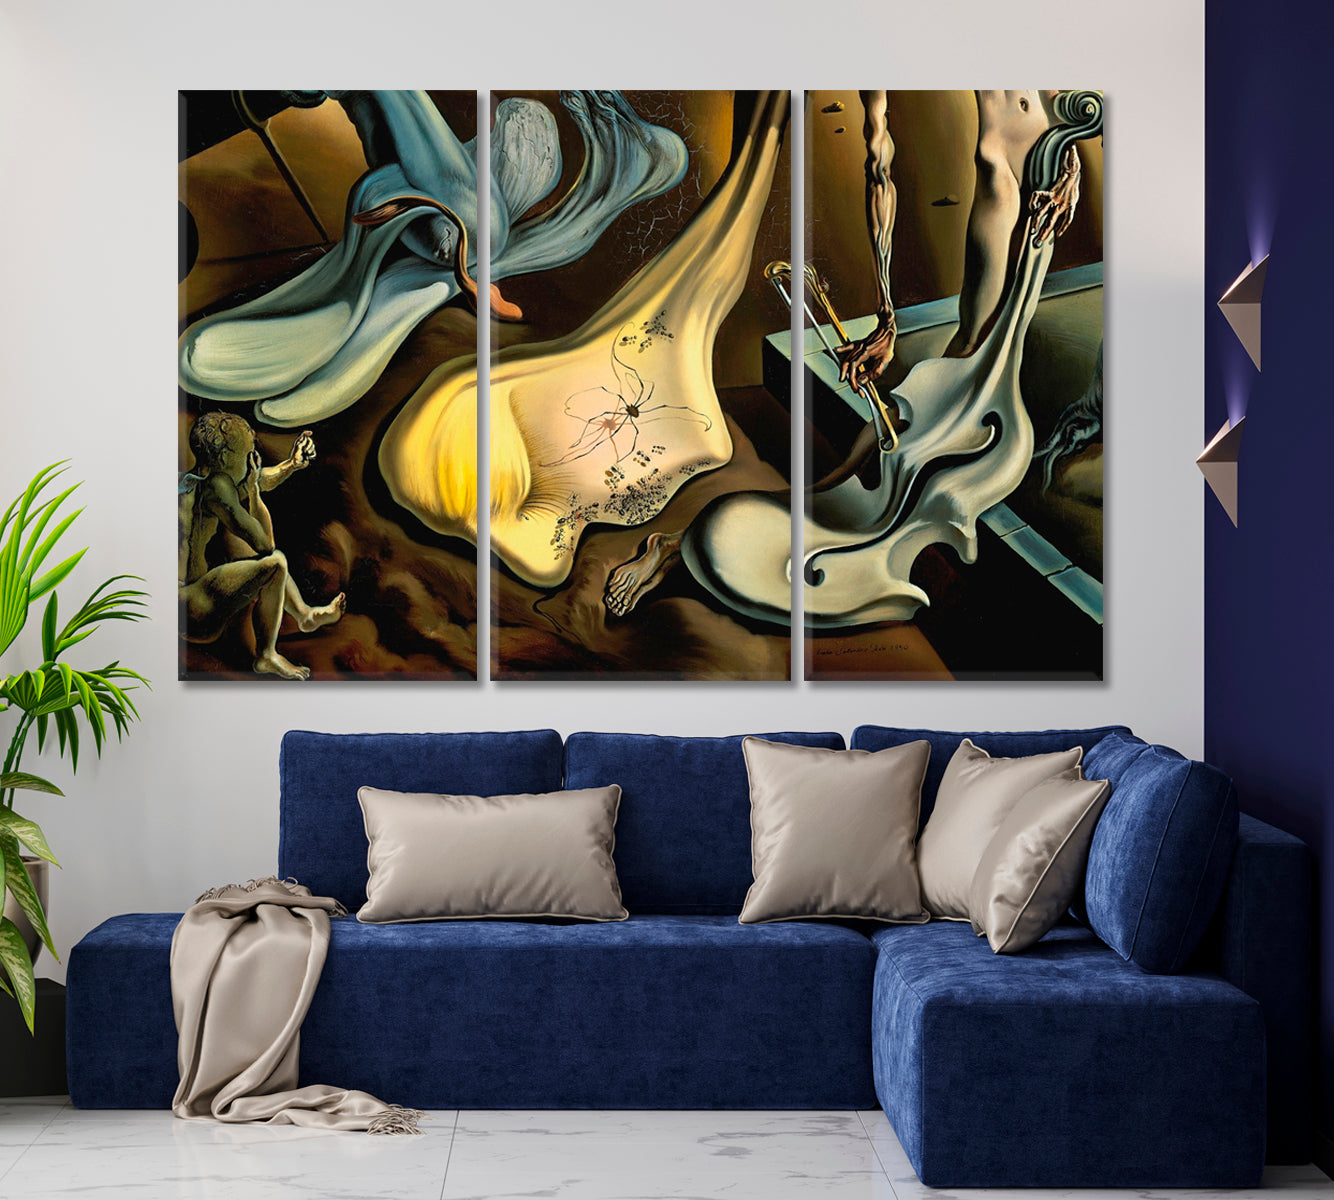 Inspirid by Salvador Dali Surreal Abstract Modern Artwork Surreal Fantasy Large Art Print Décor Artesty 3 panels 36" x 24" 